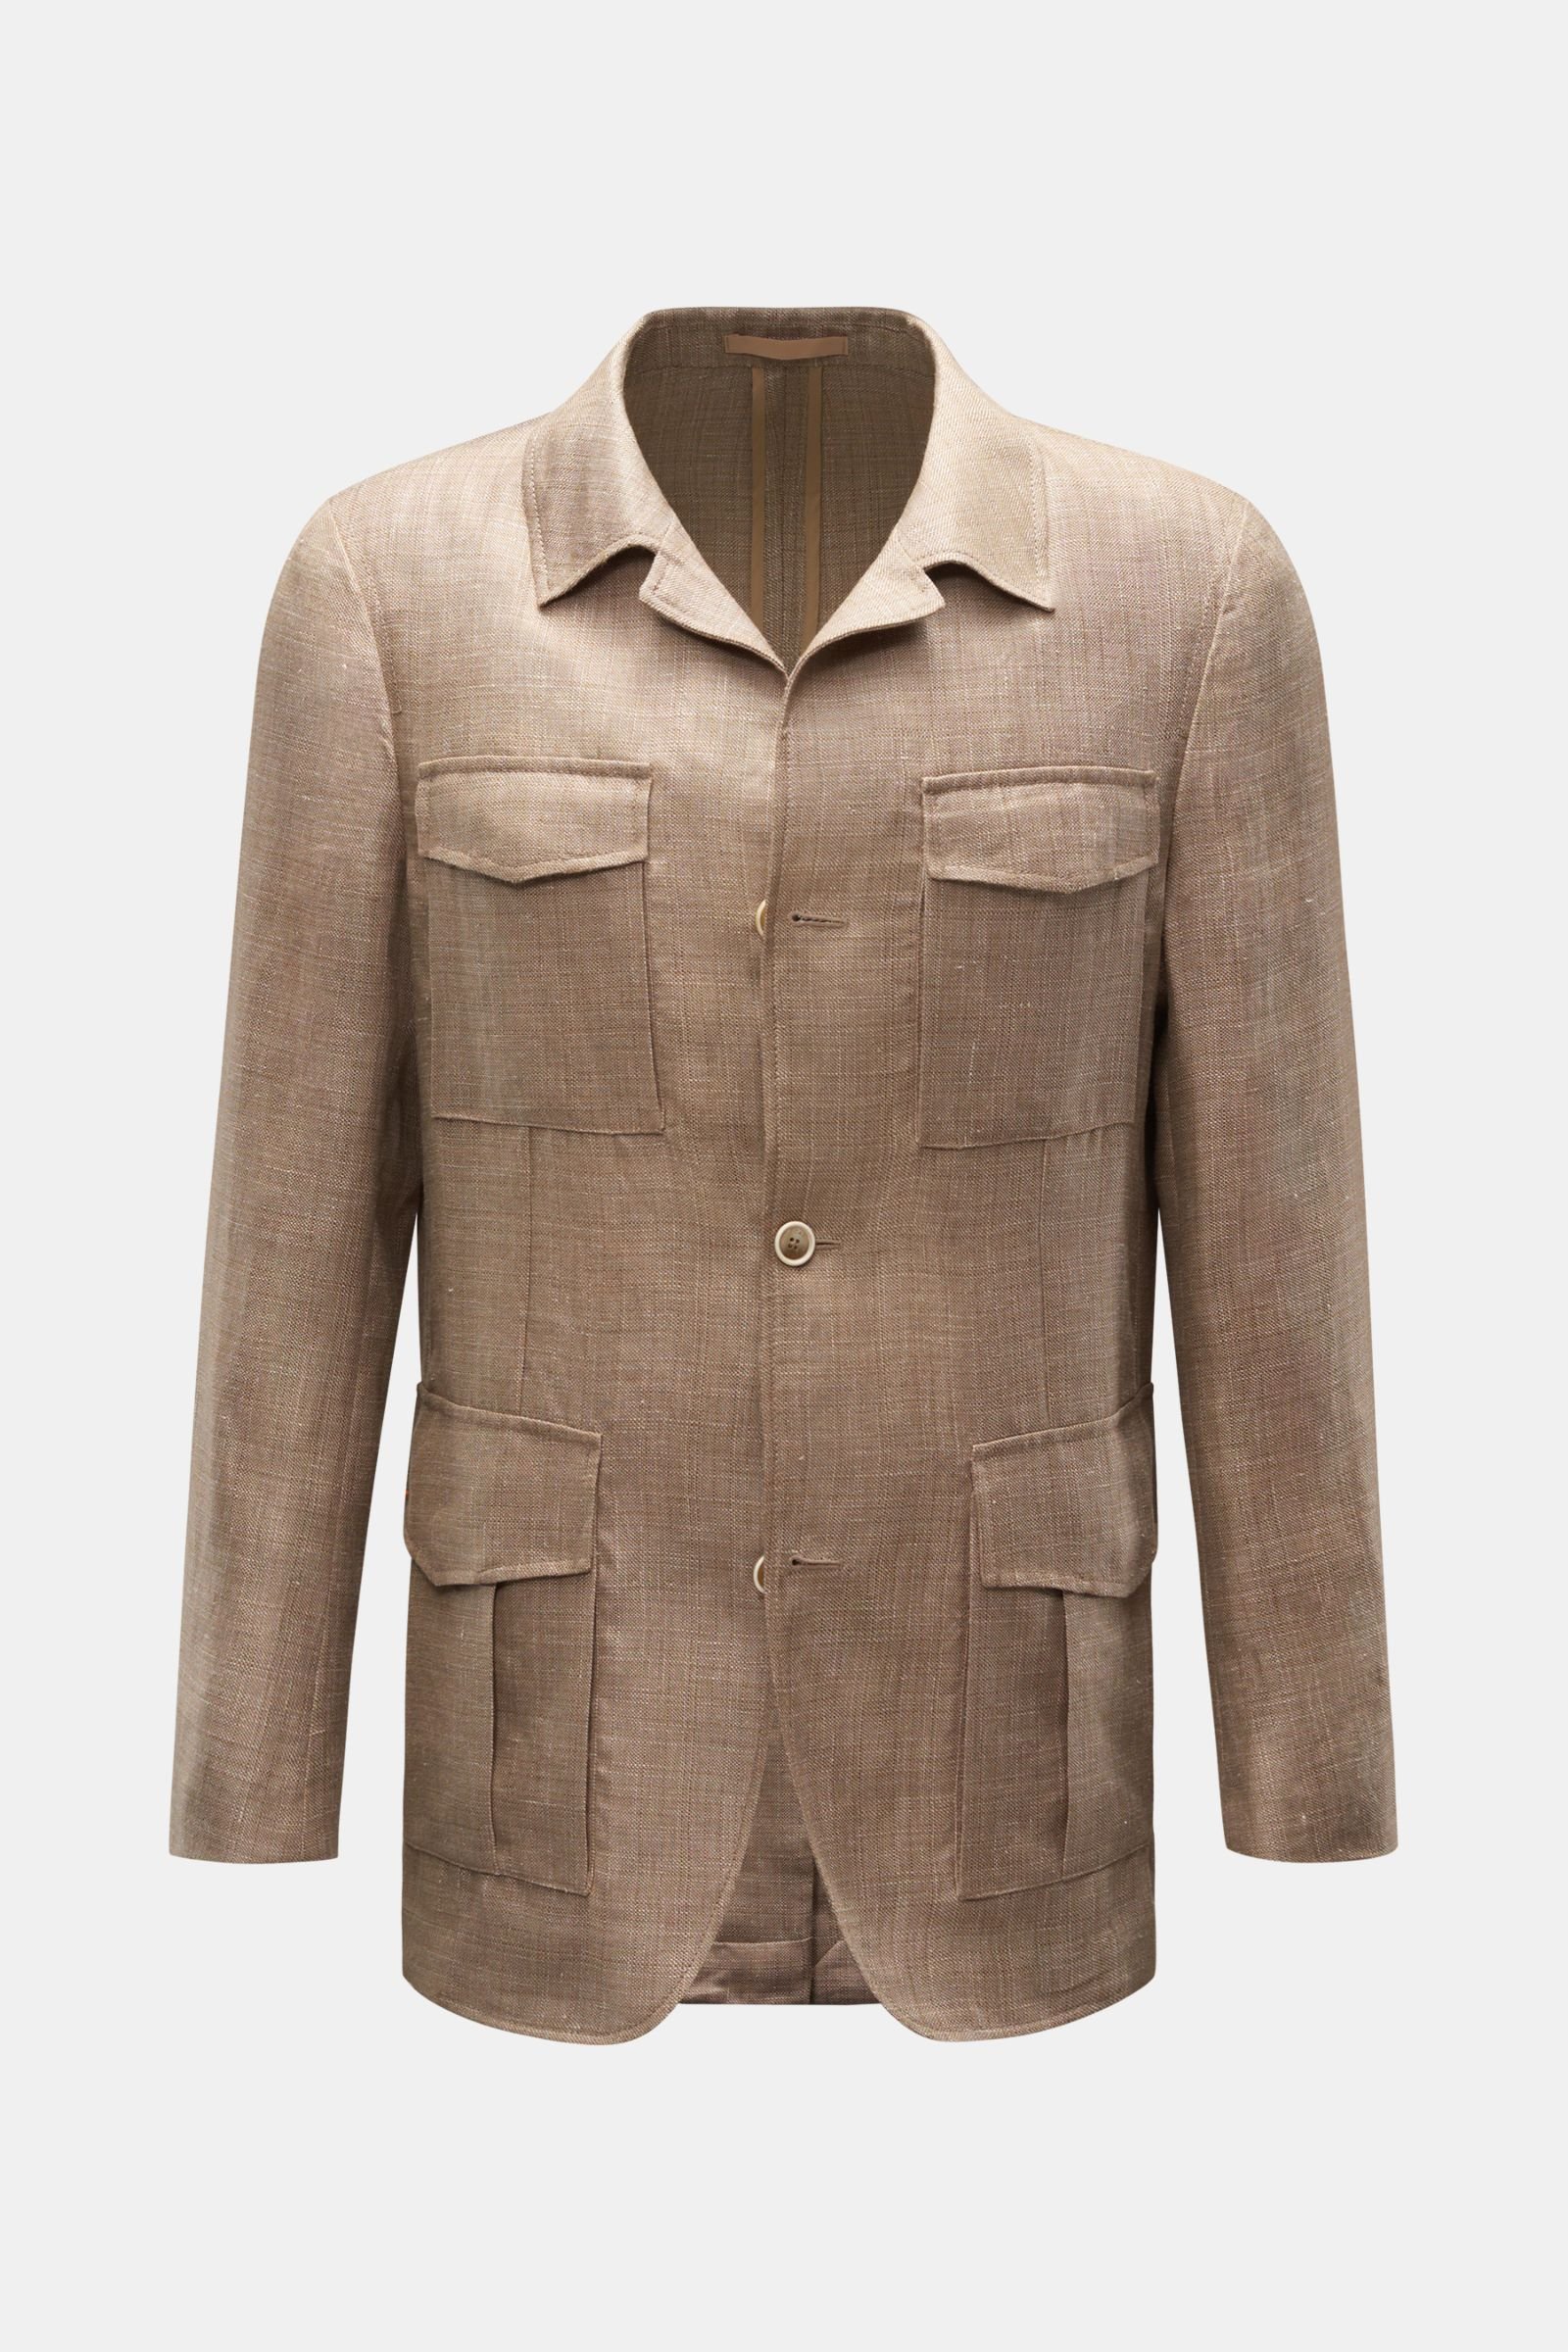 Smart-casual jacket 'Serengeti Jacket' light brown